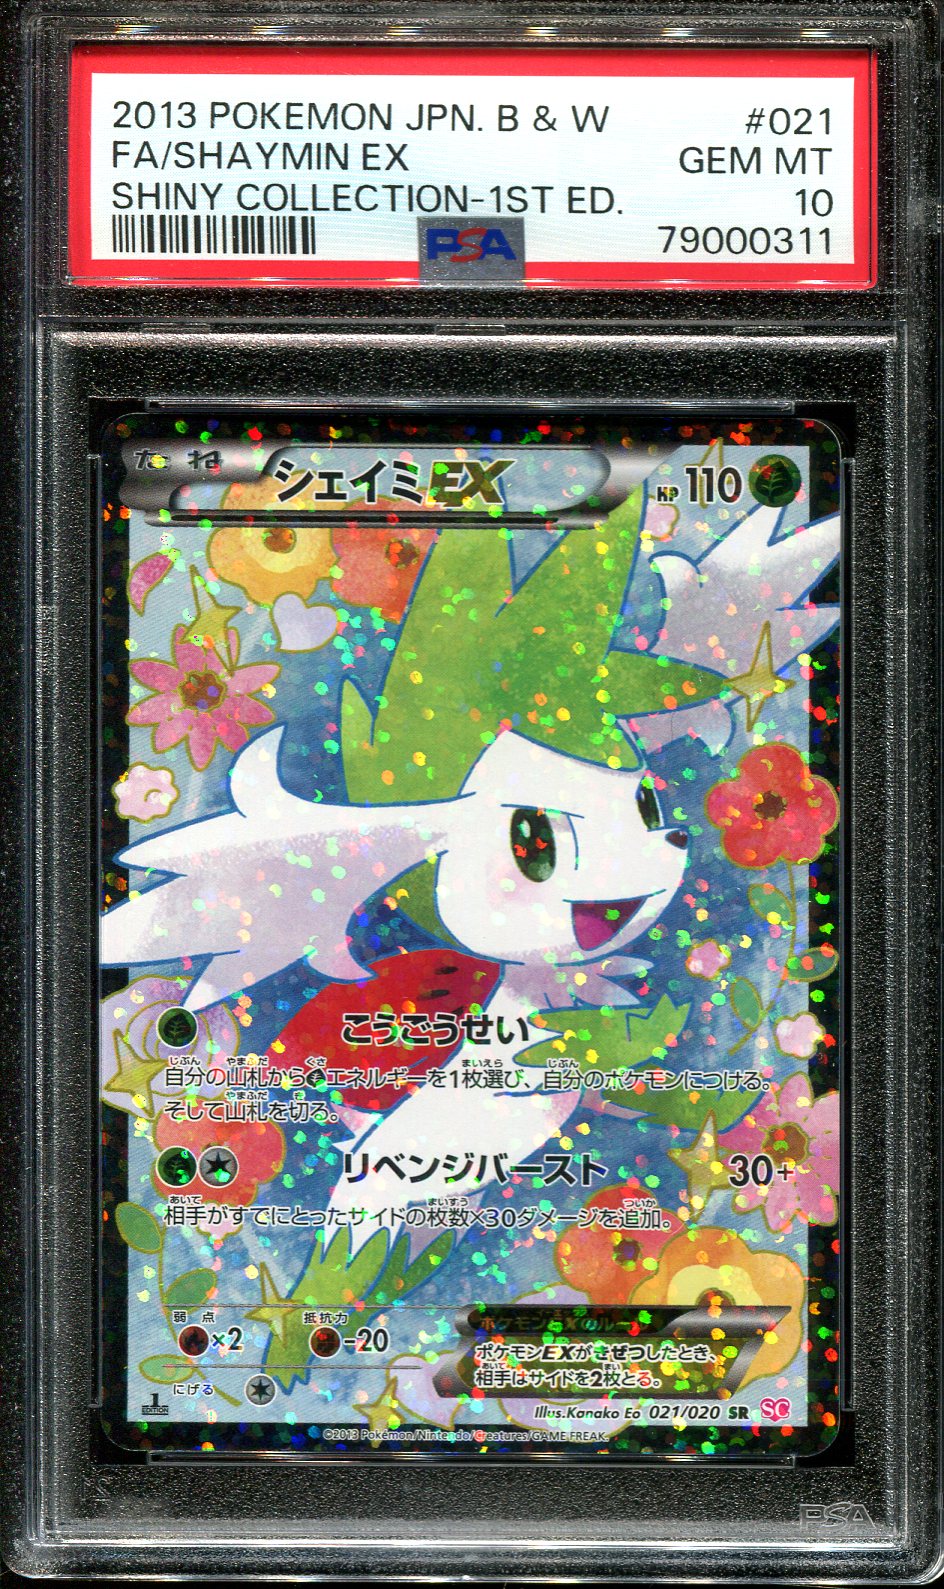 PSA 9 Mint Pikachu 007/012 Shaymin LV.X Collection Pack 2009 Japanese Graded